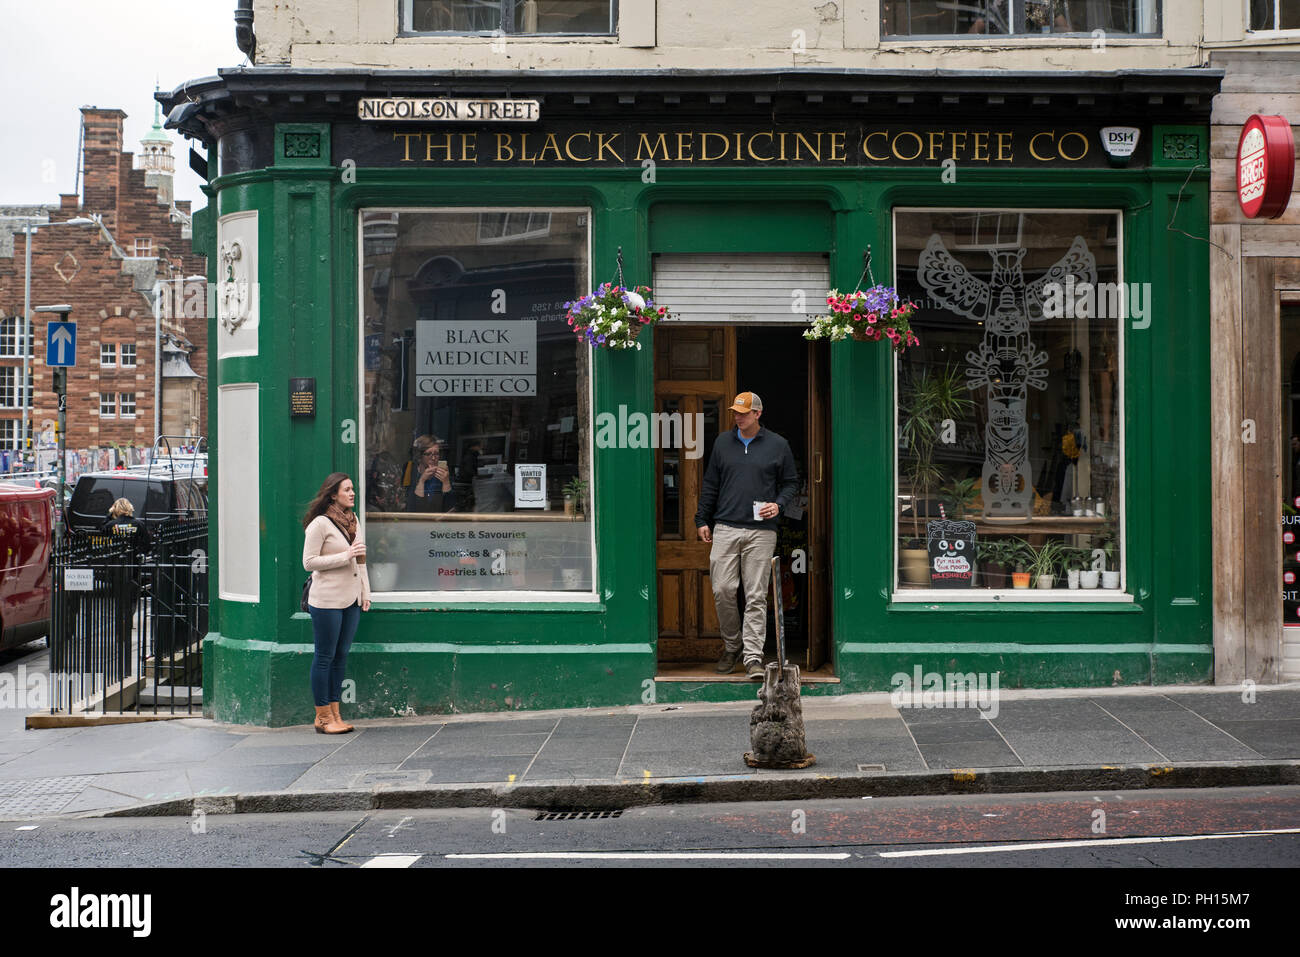 The Black Medicine Coffee Company, Nicolson Street, Edinburgh, Scotland, UK. Stock Photo